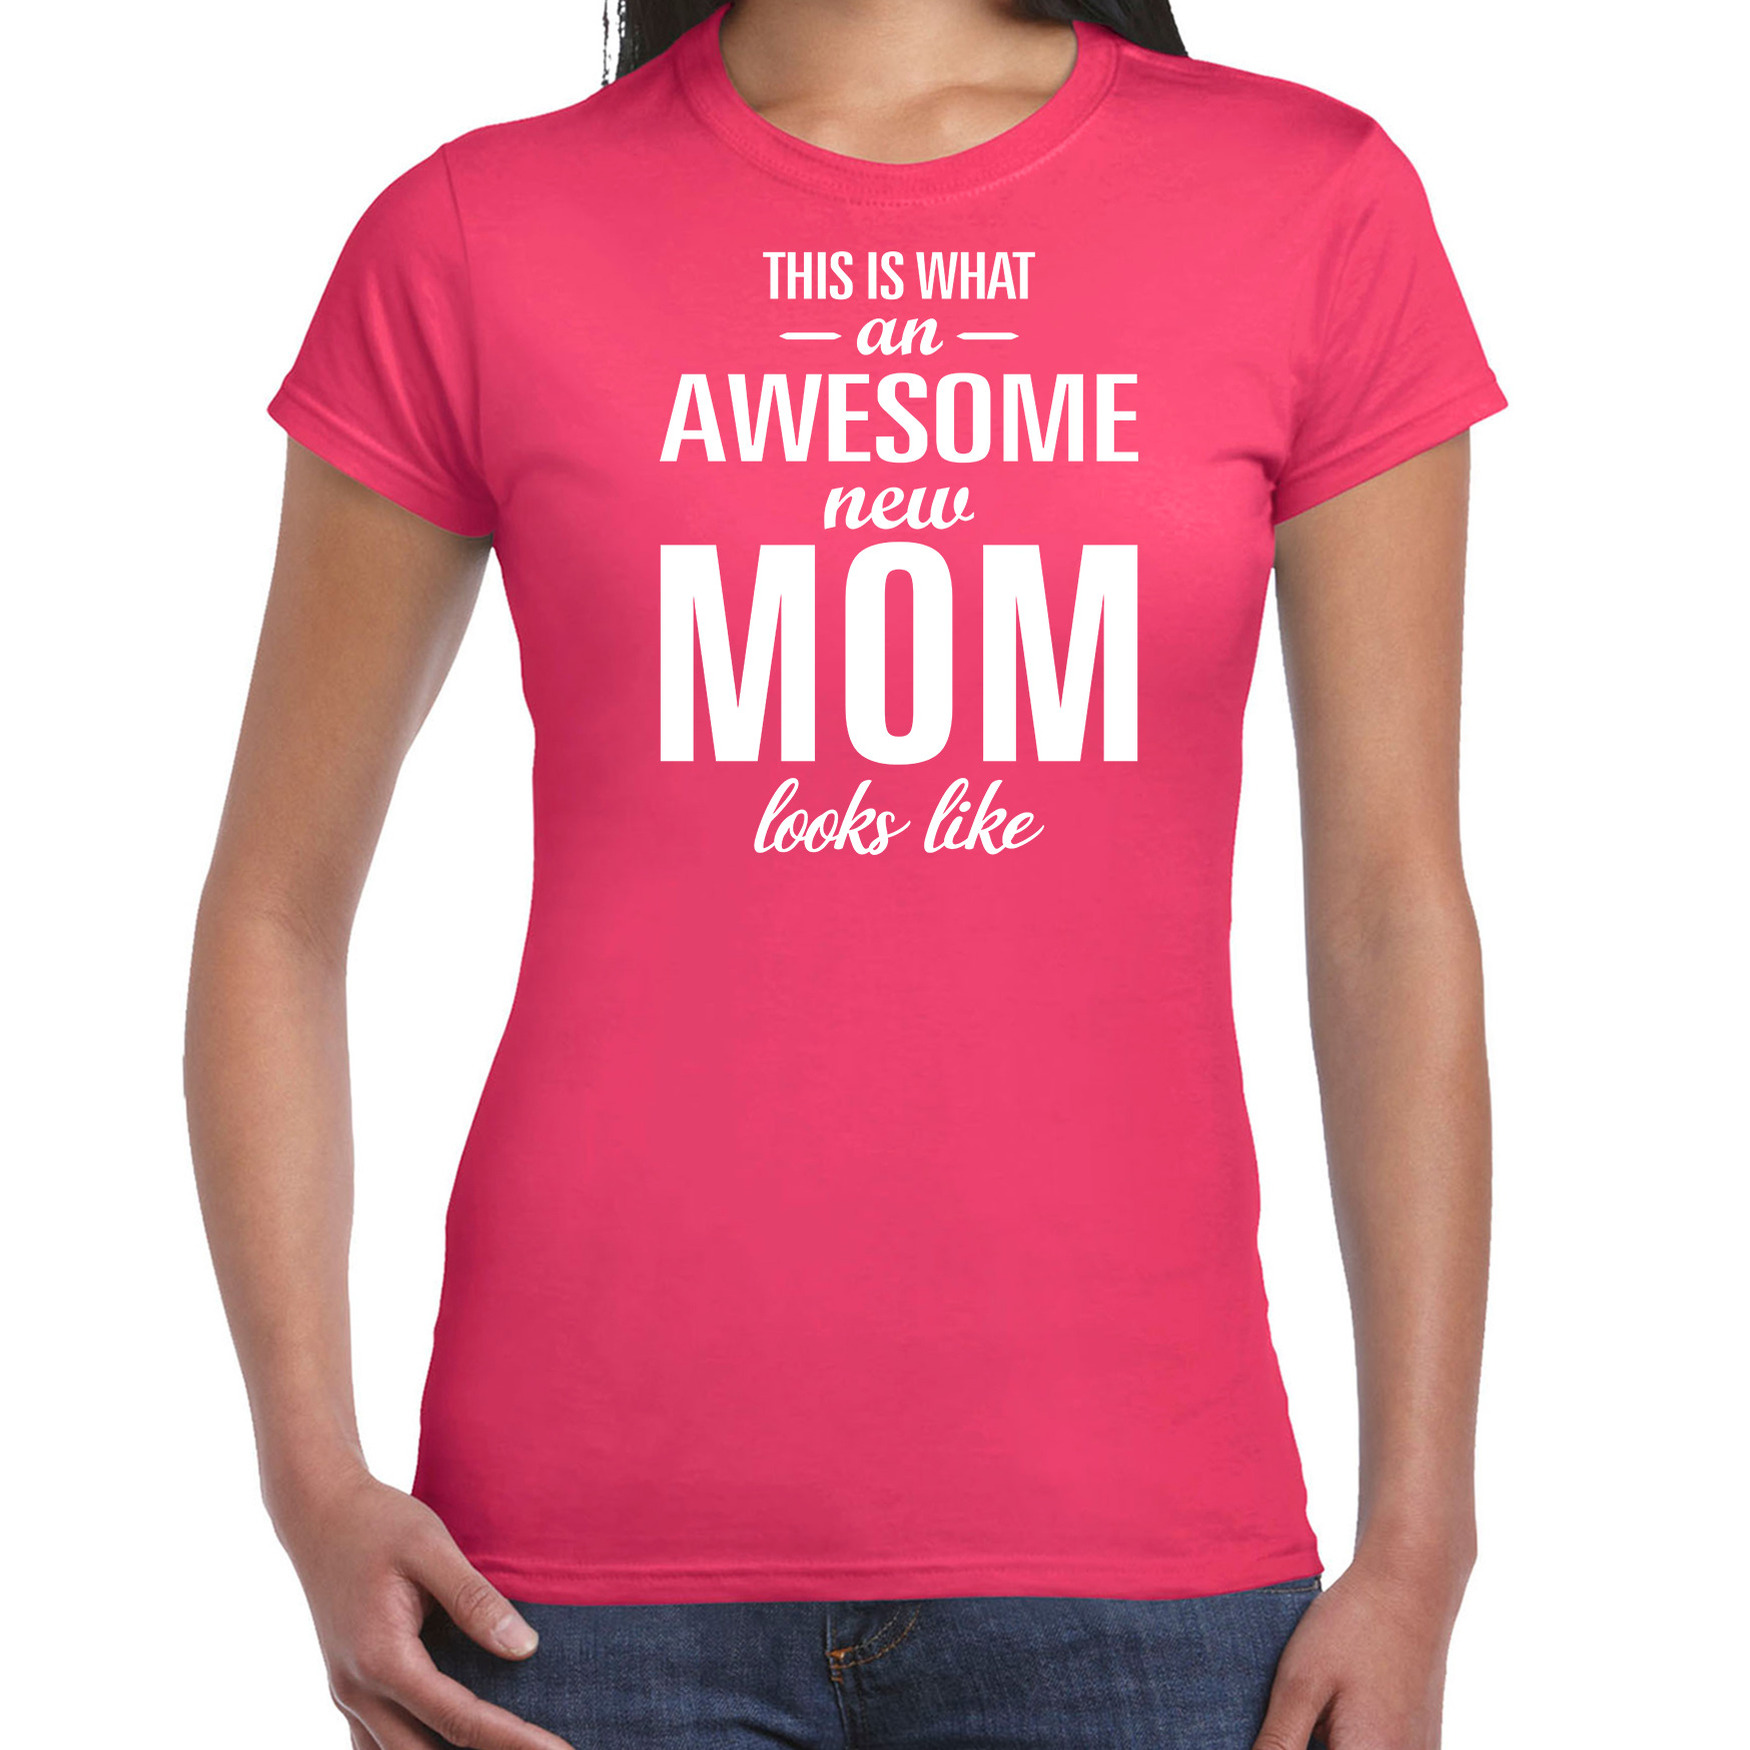 Awesome new mom t-shirt fuchsia roze voor dames Cadeau aanstaande moeder- zwanger